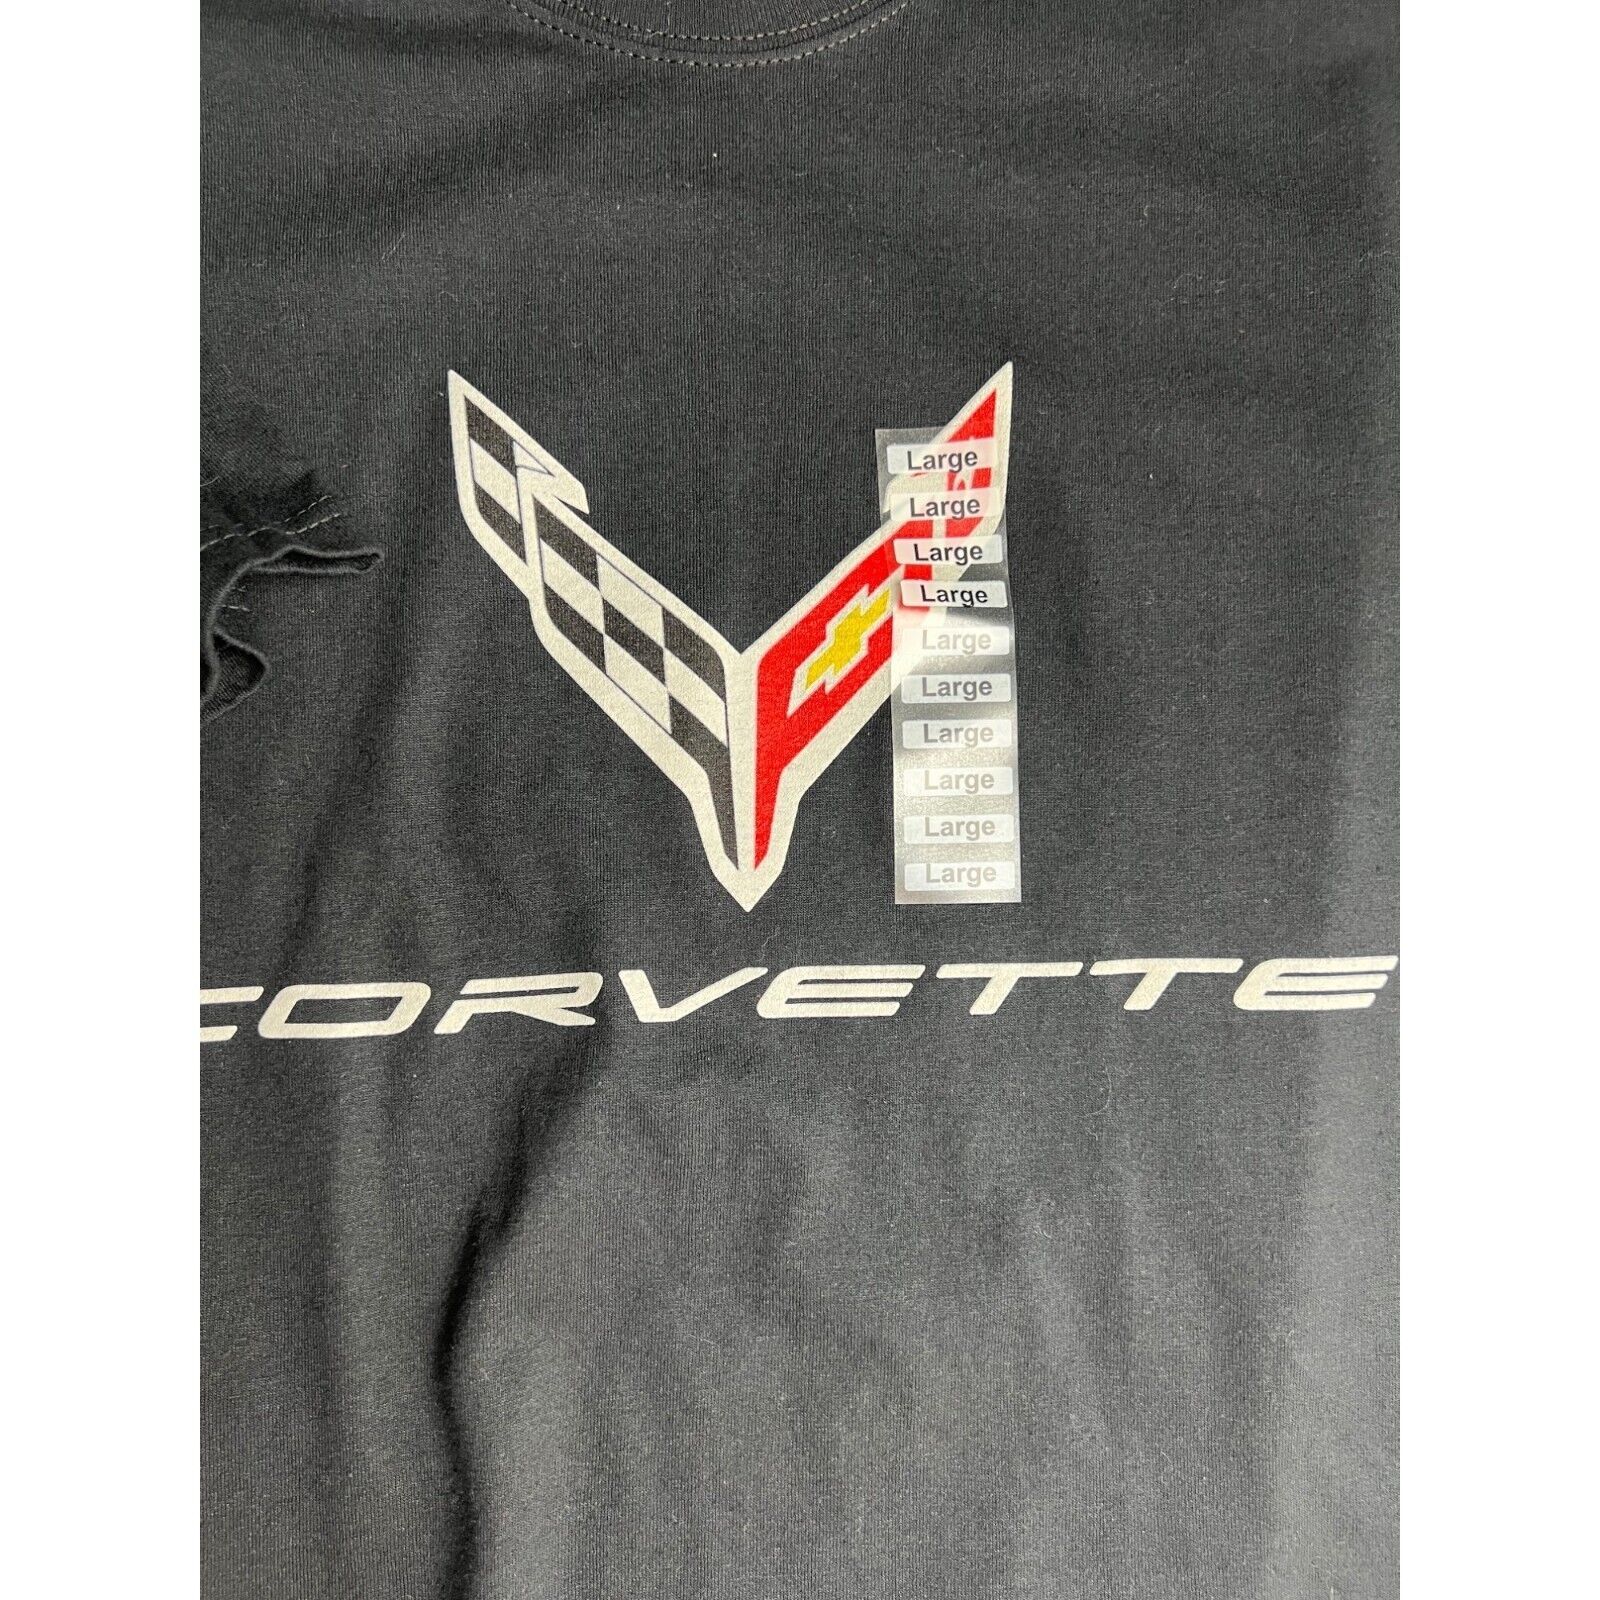 Primary image for Chevy Corvette Men T Shirt Black Short Sleeve Crew Neck Tee Large L New!